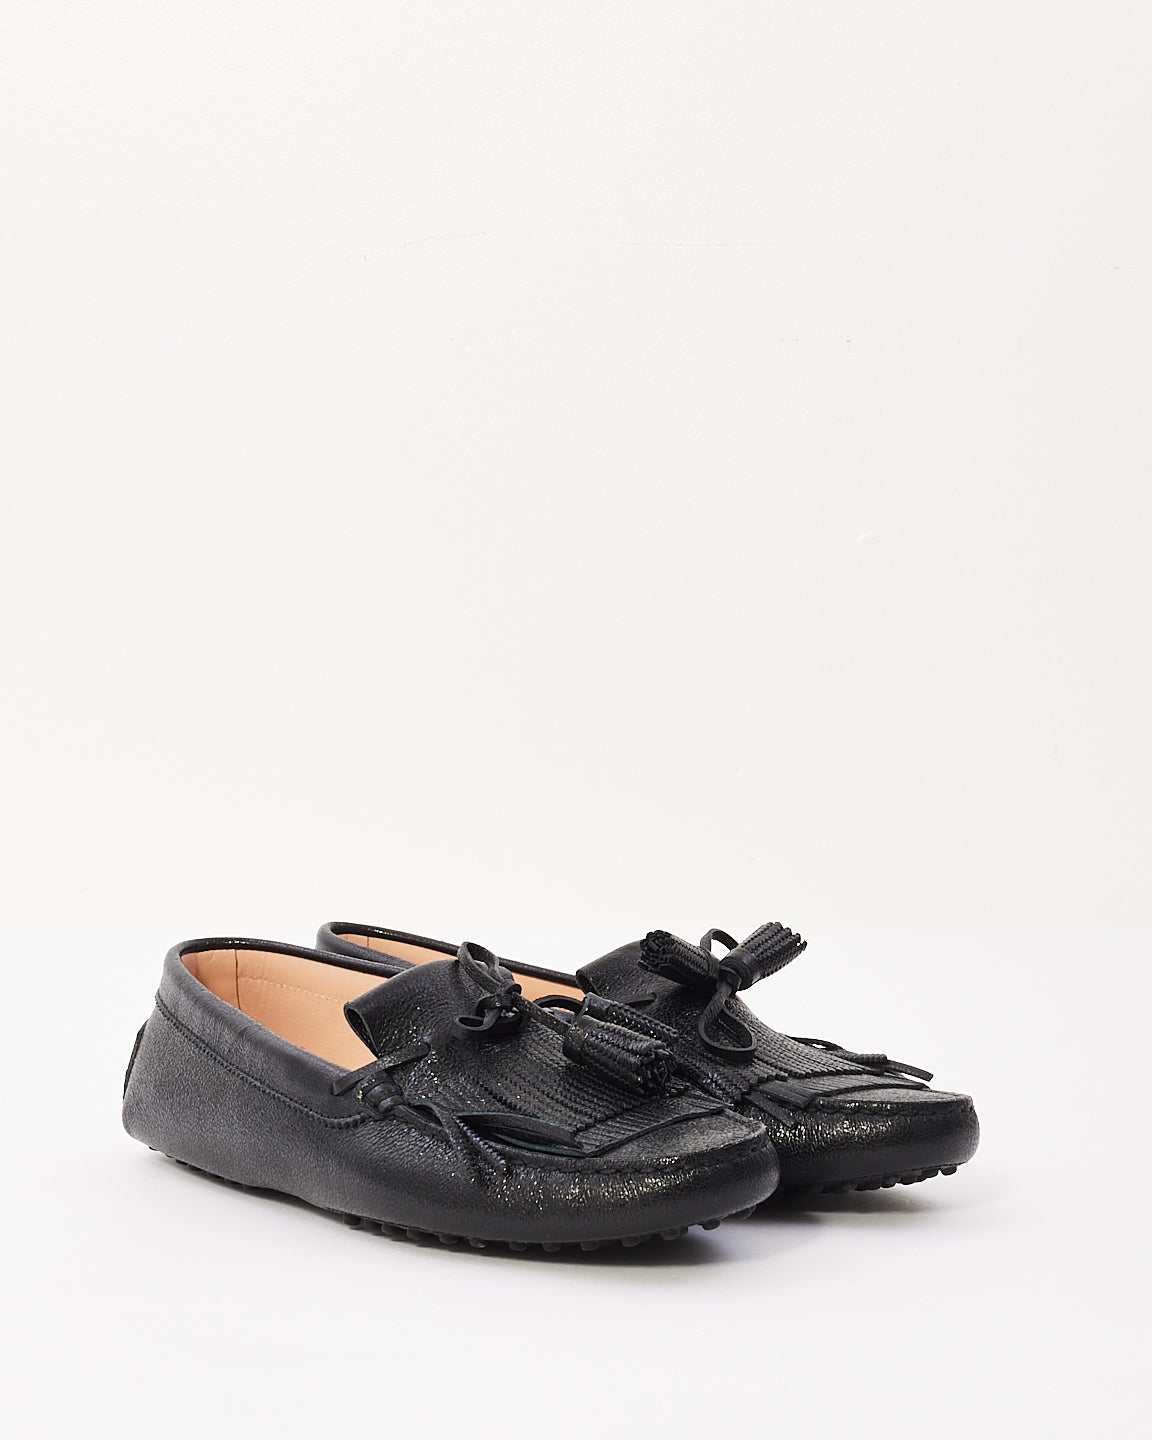 Tods Black Leather Fringe Loafers - 39